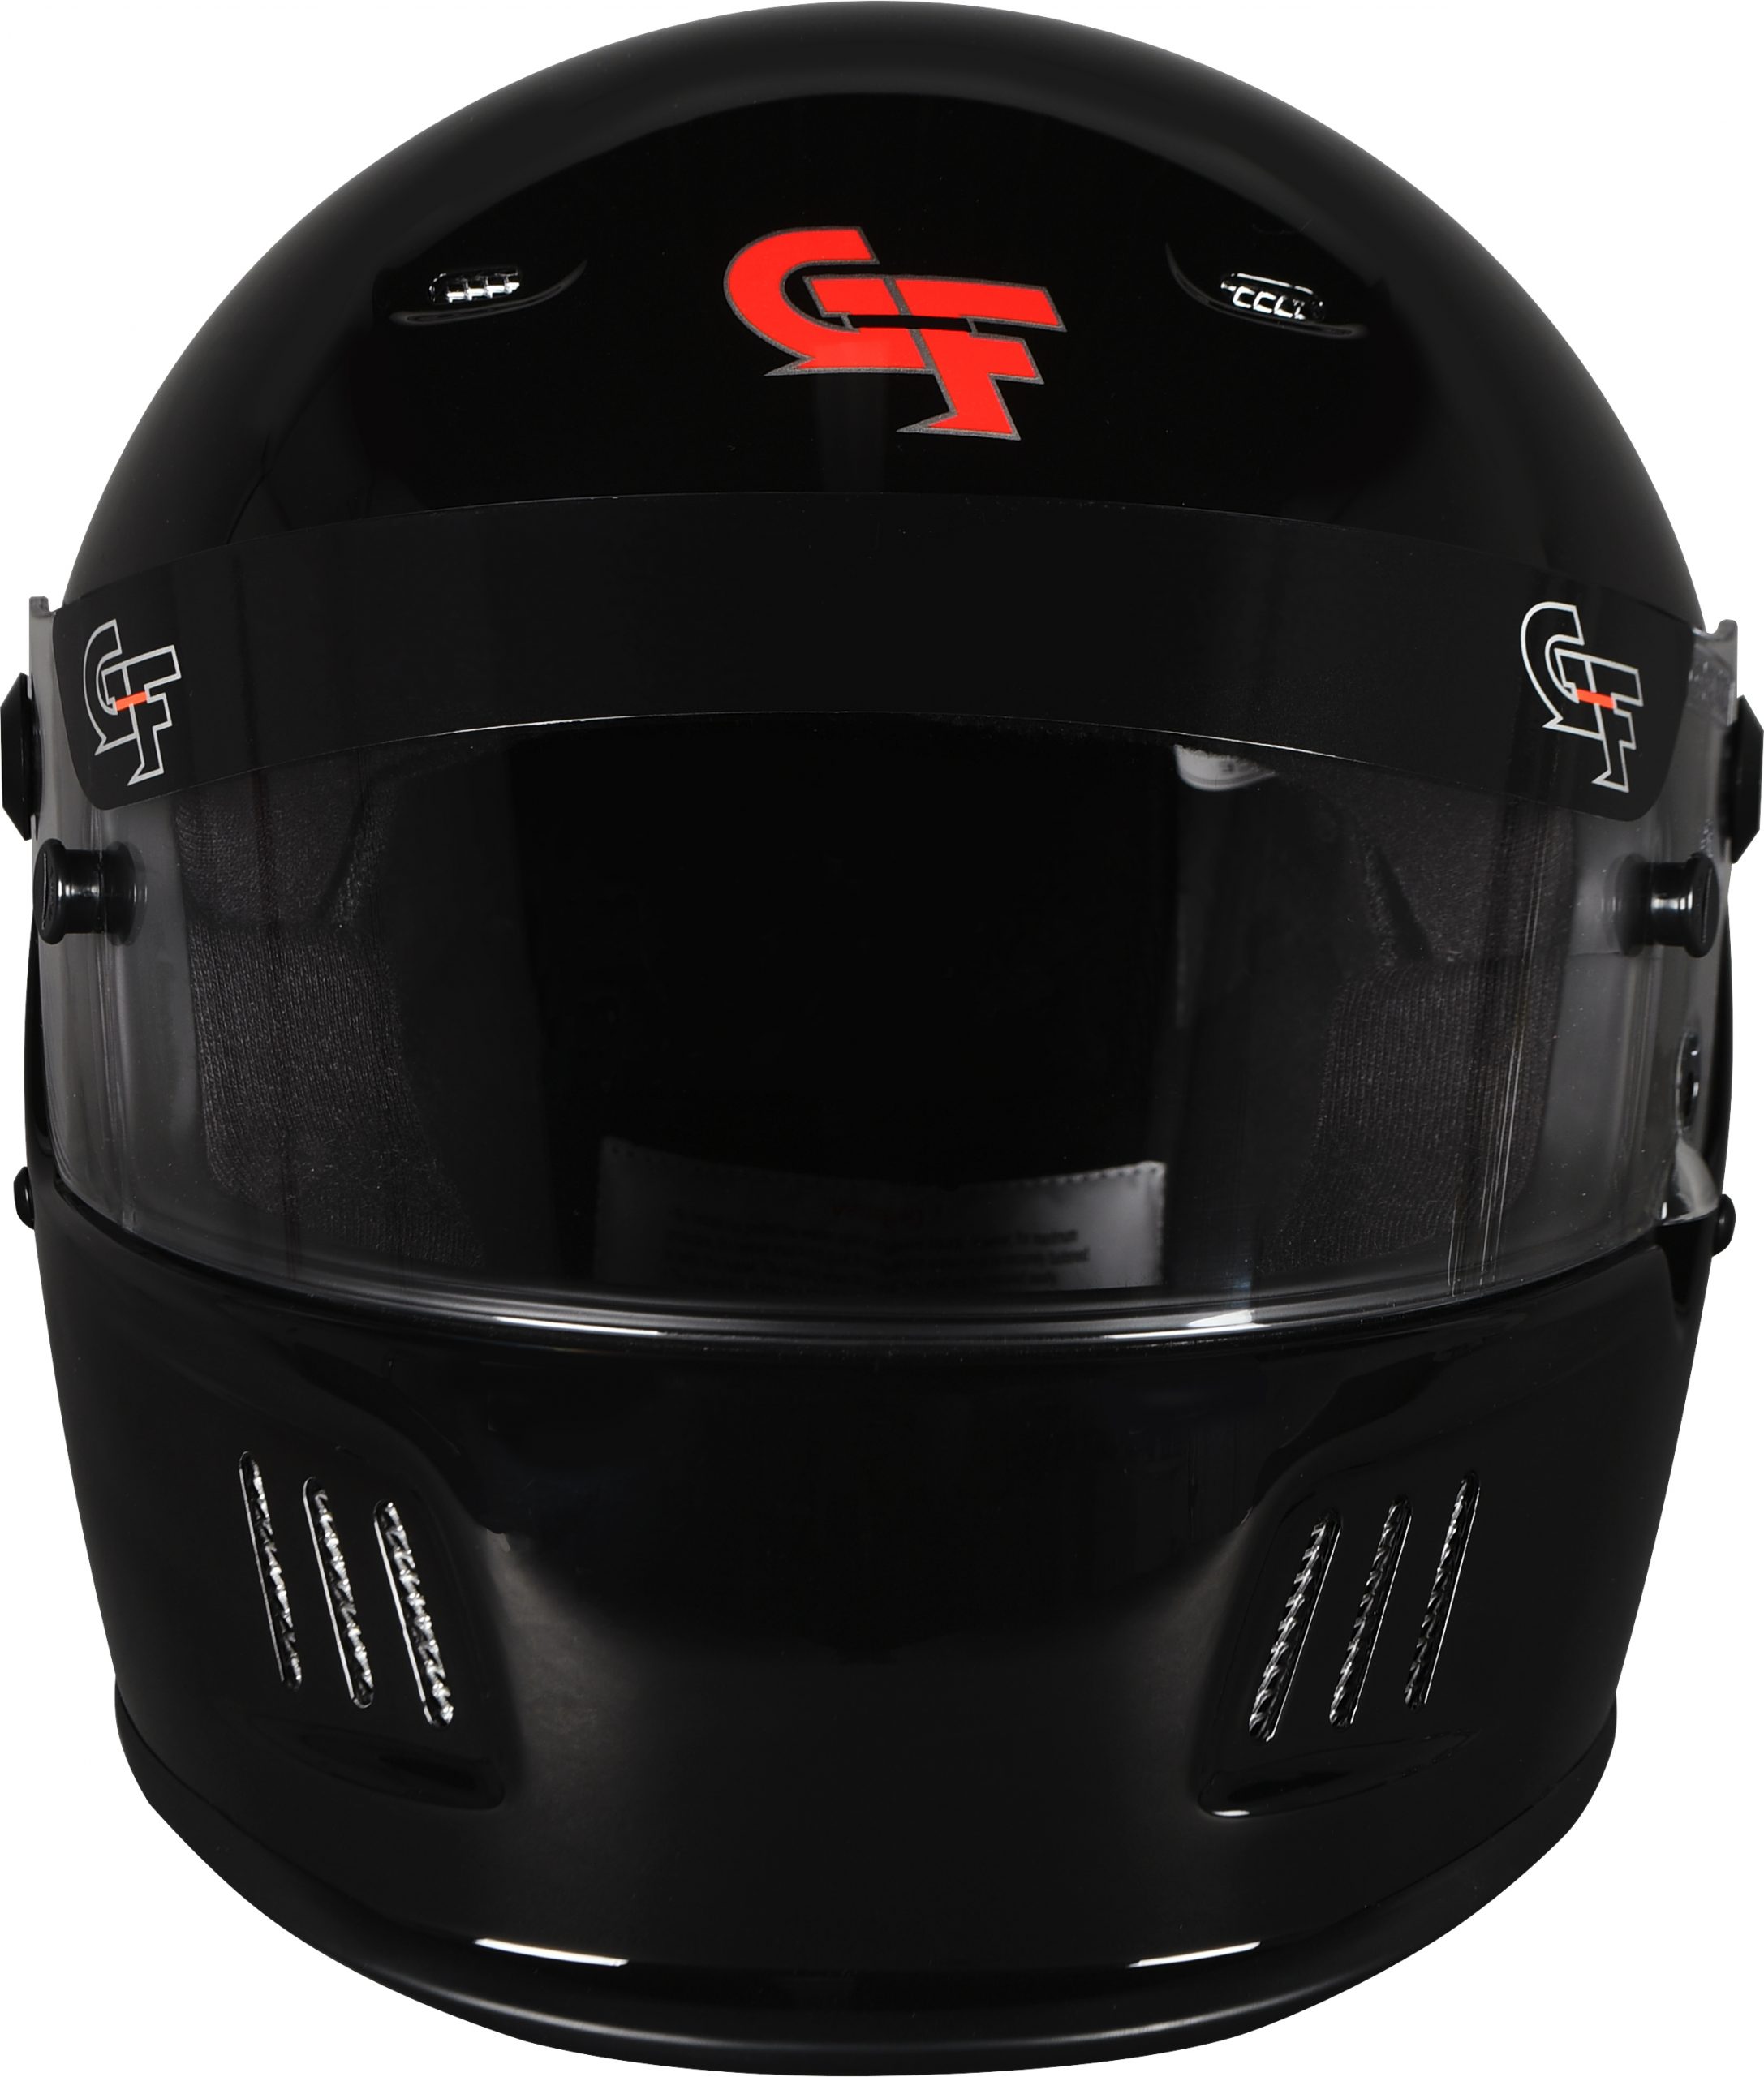 G-Force 3123MEDBK GF3 Full Face Helmet, Black, Medium - image 3 of 3